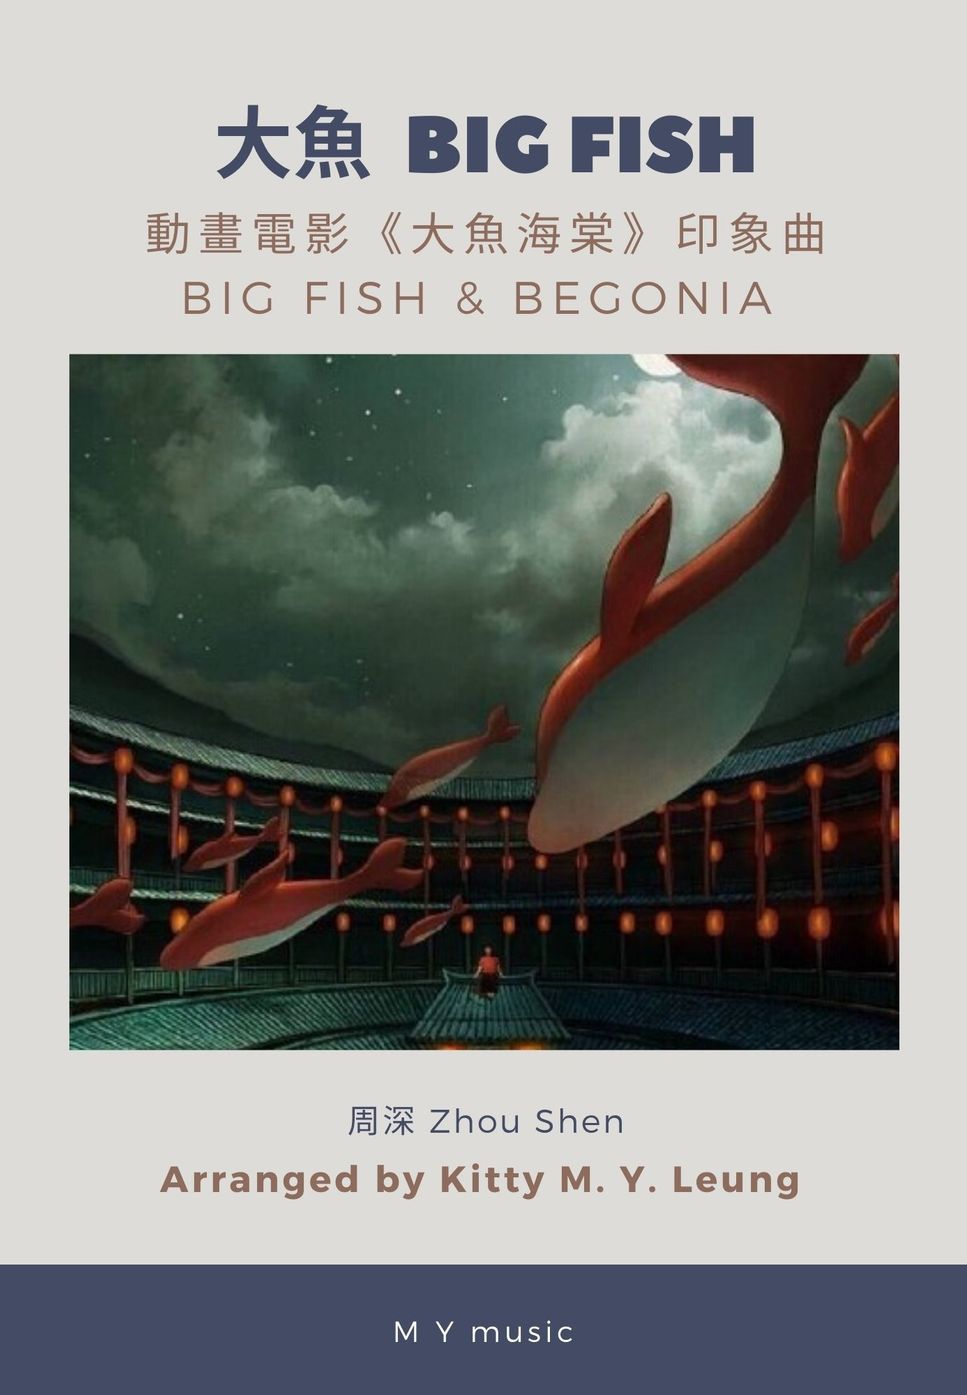 Big Fish & Begonia - Big Fish by Kitty M. Y. Leung